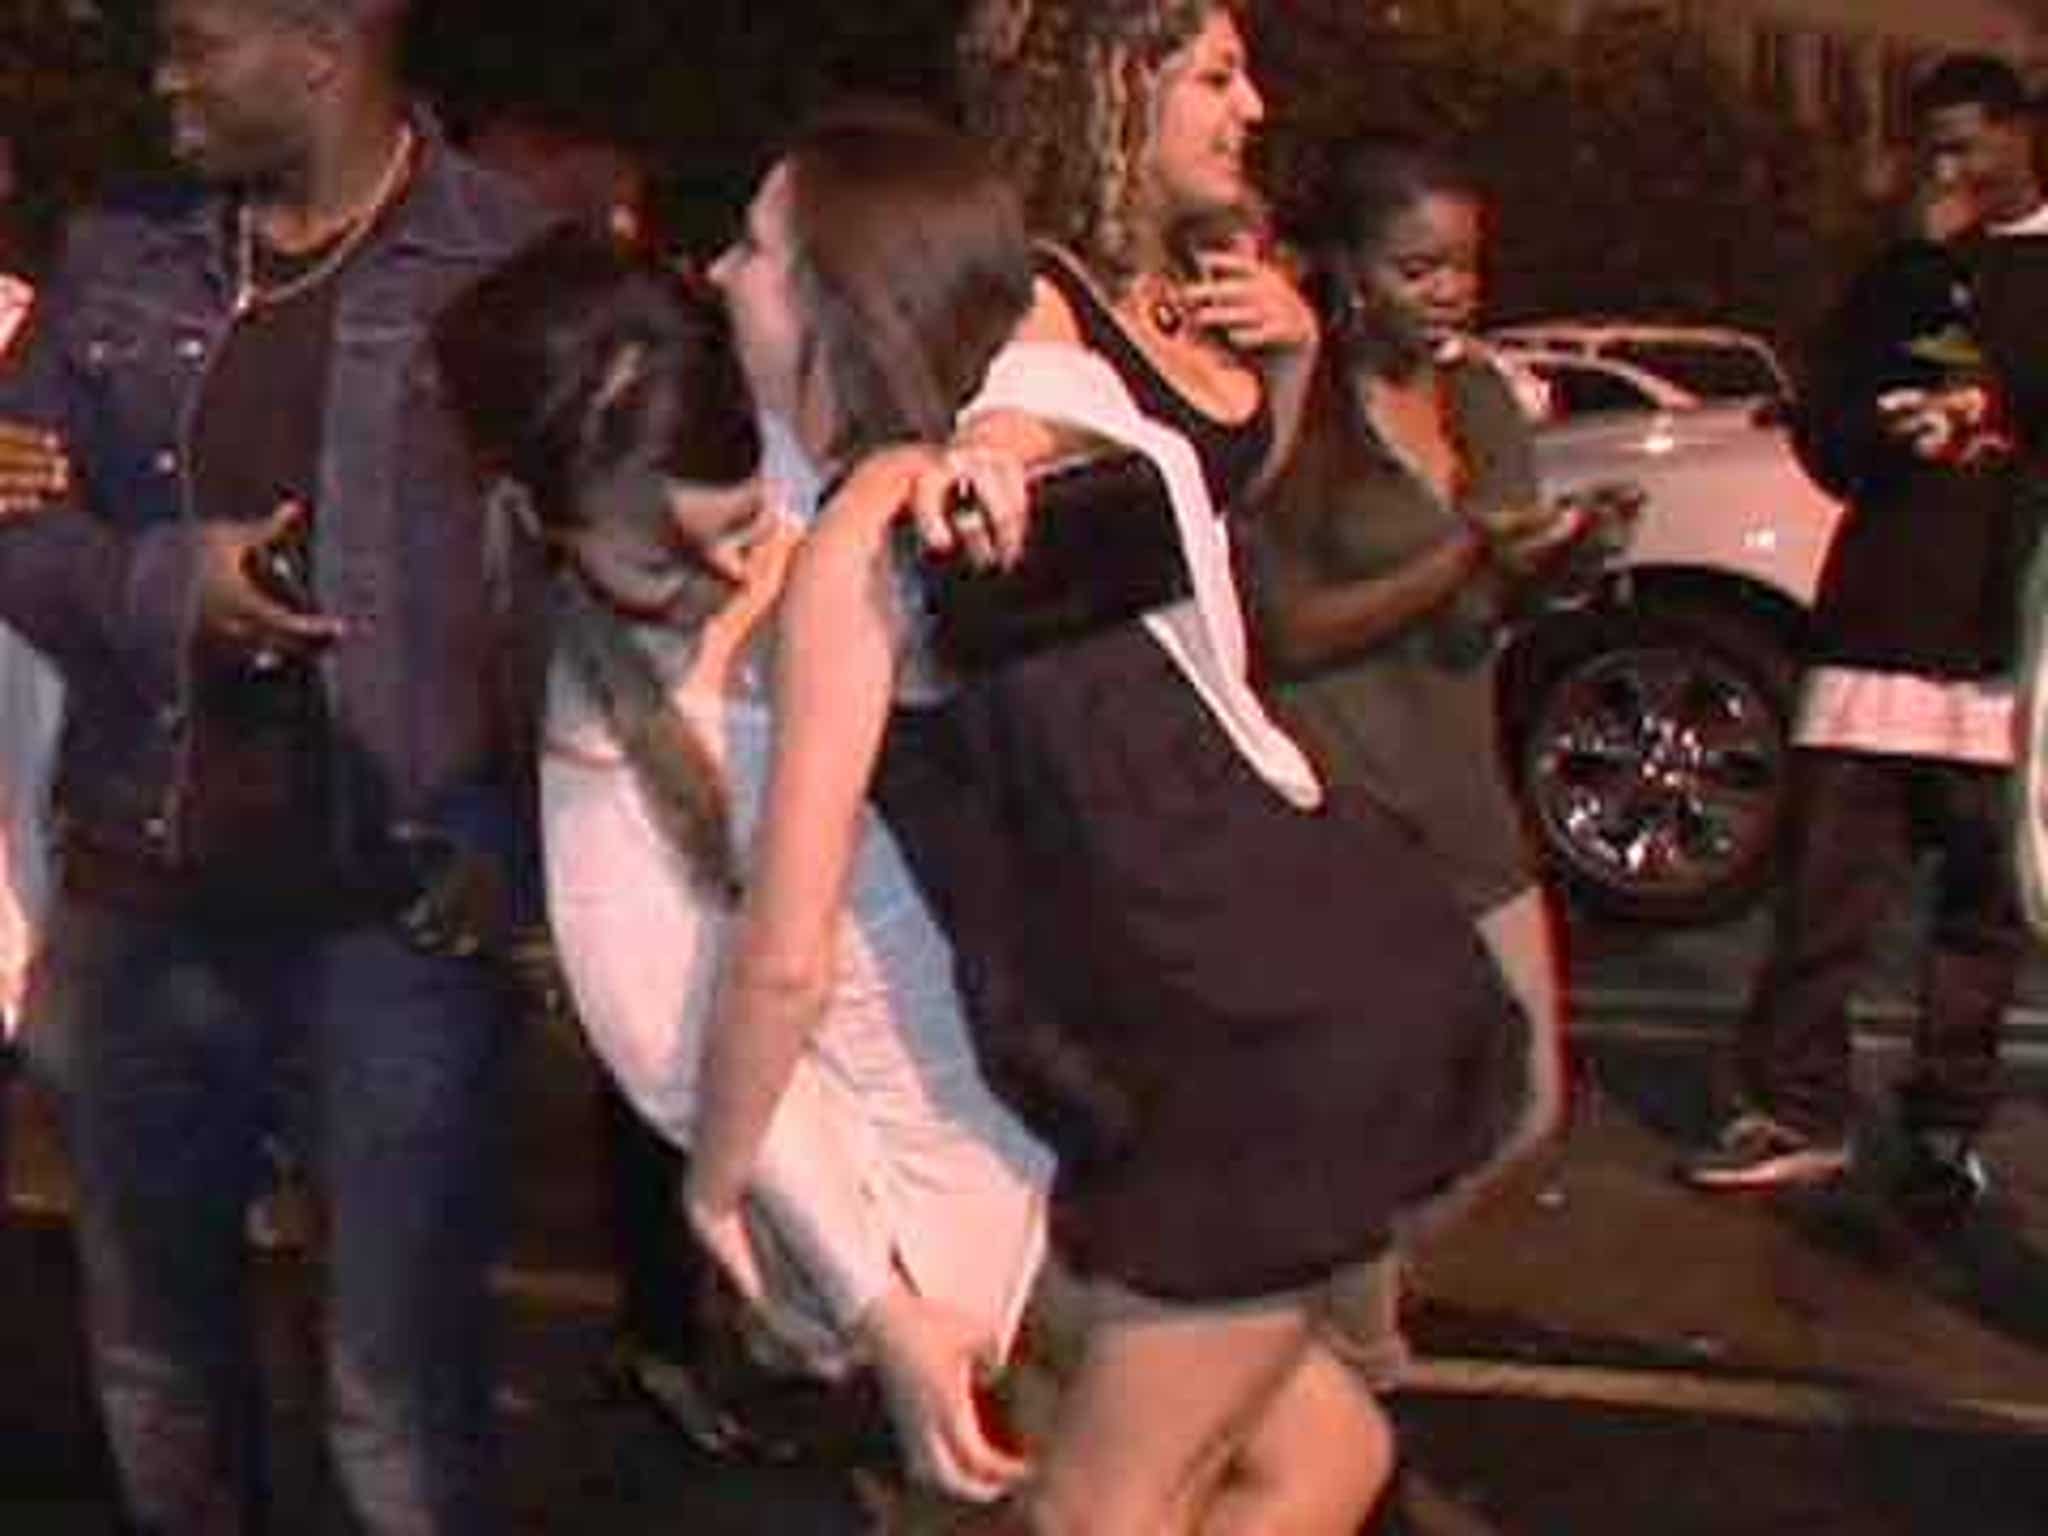 cedric ramos share drunk girls showing all photos